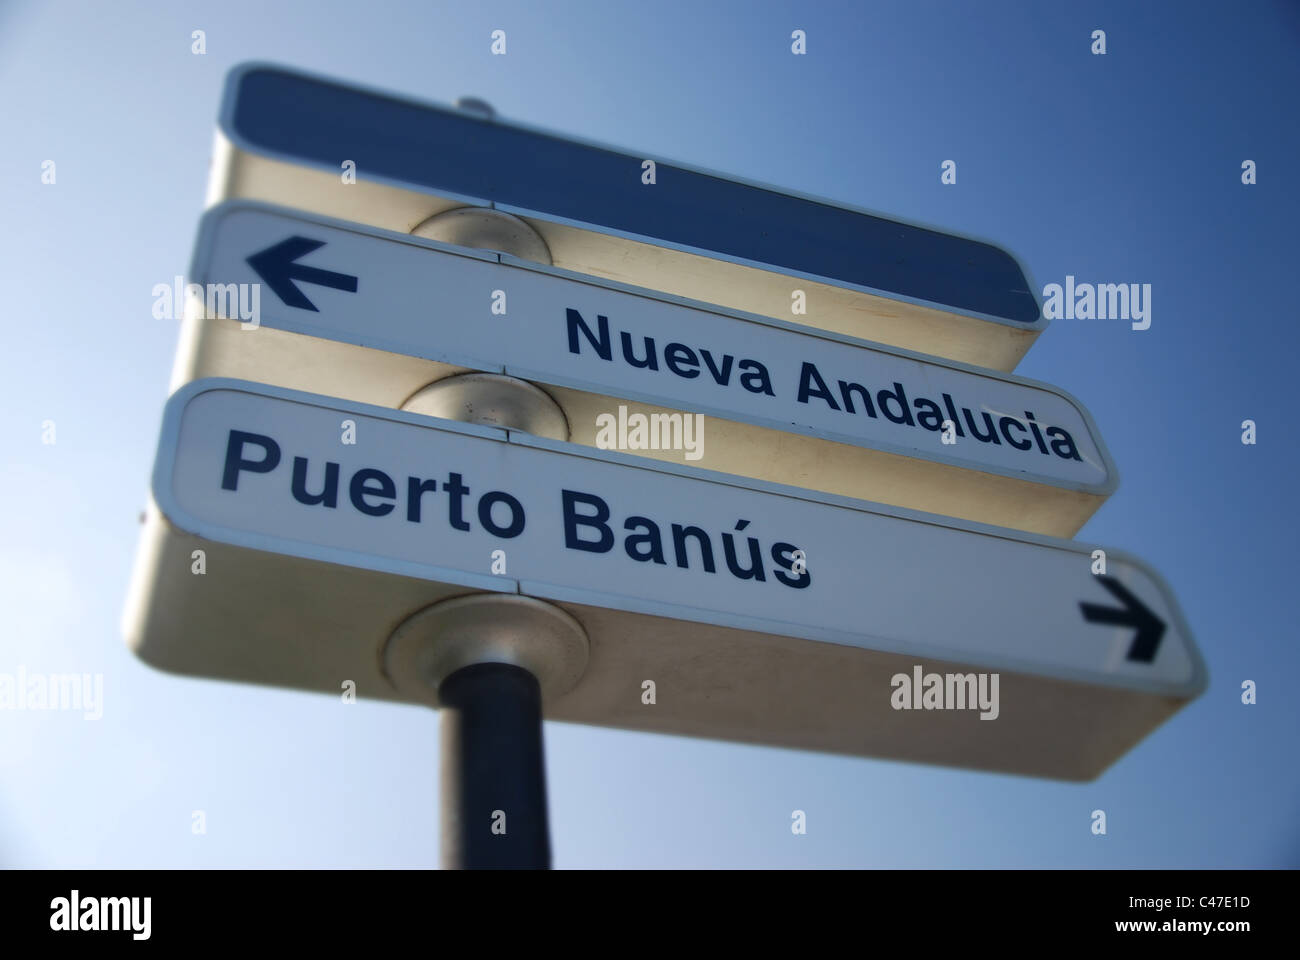 Straßenschild für Puerto Banus und Nueva Andalucia Puerto Banus Spanien Europa Stockfoto